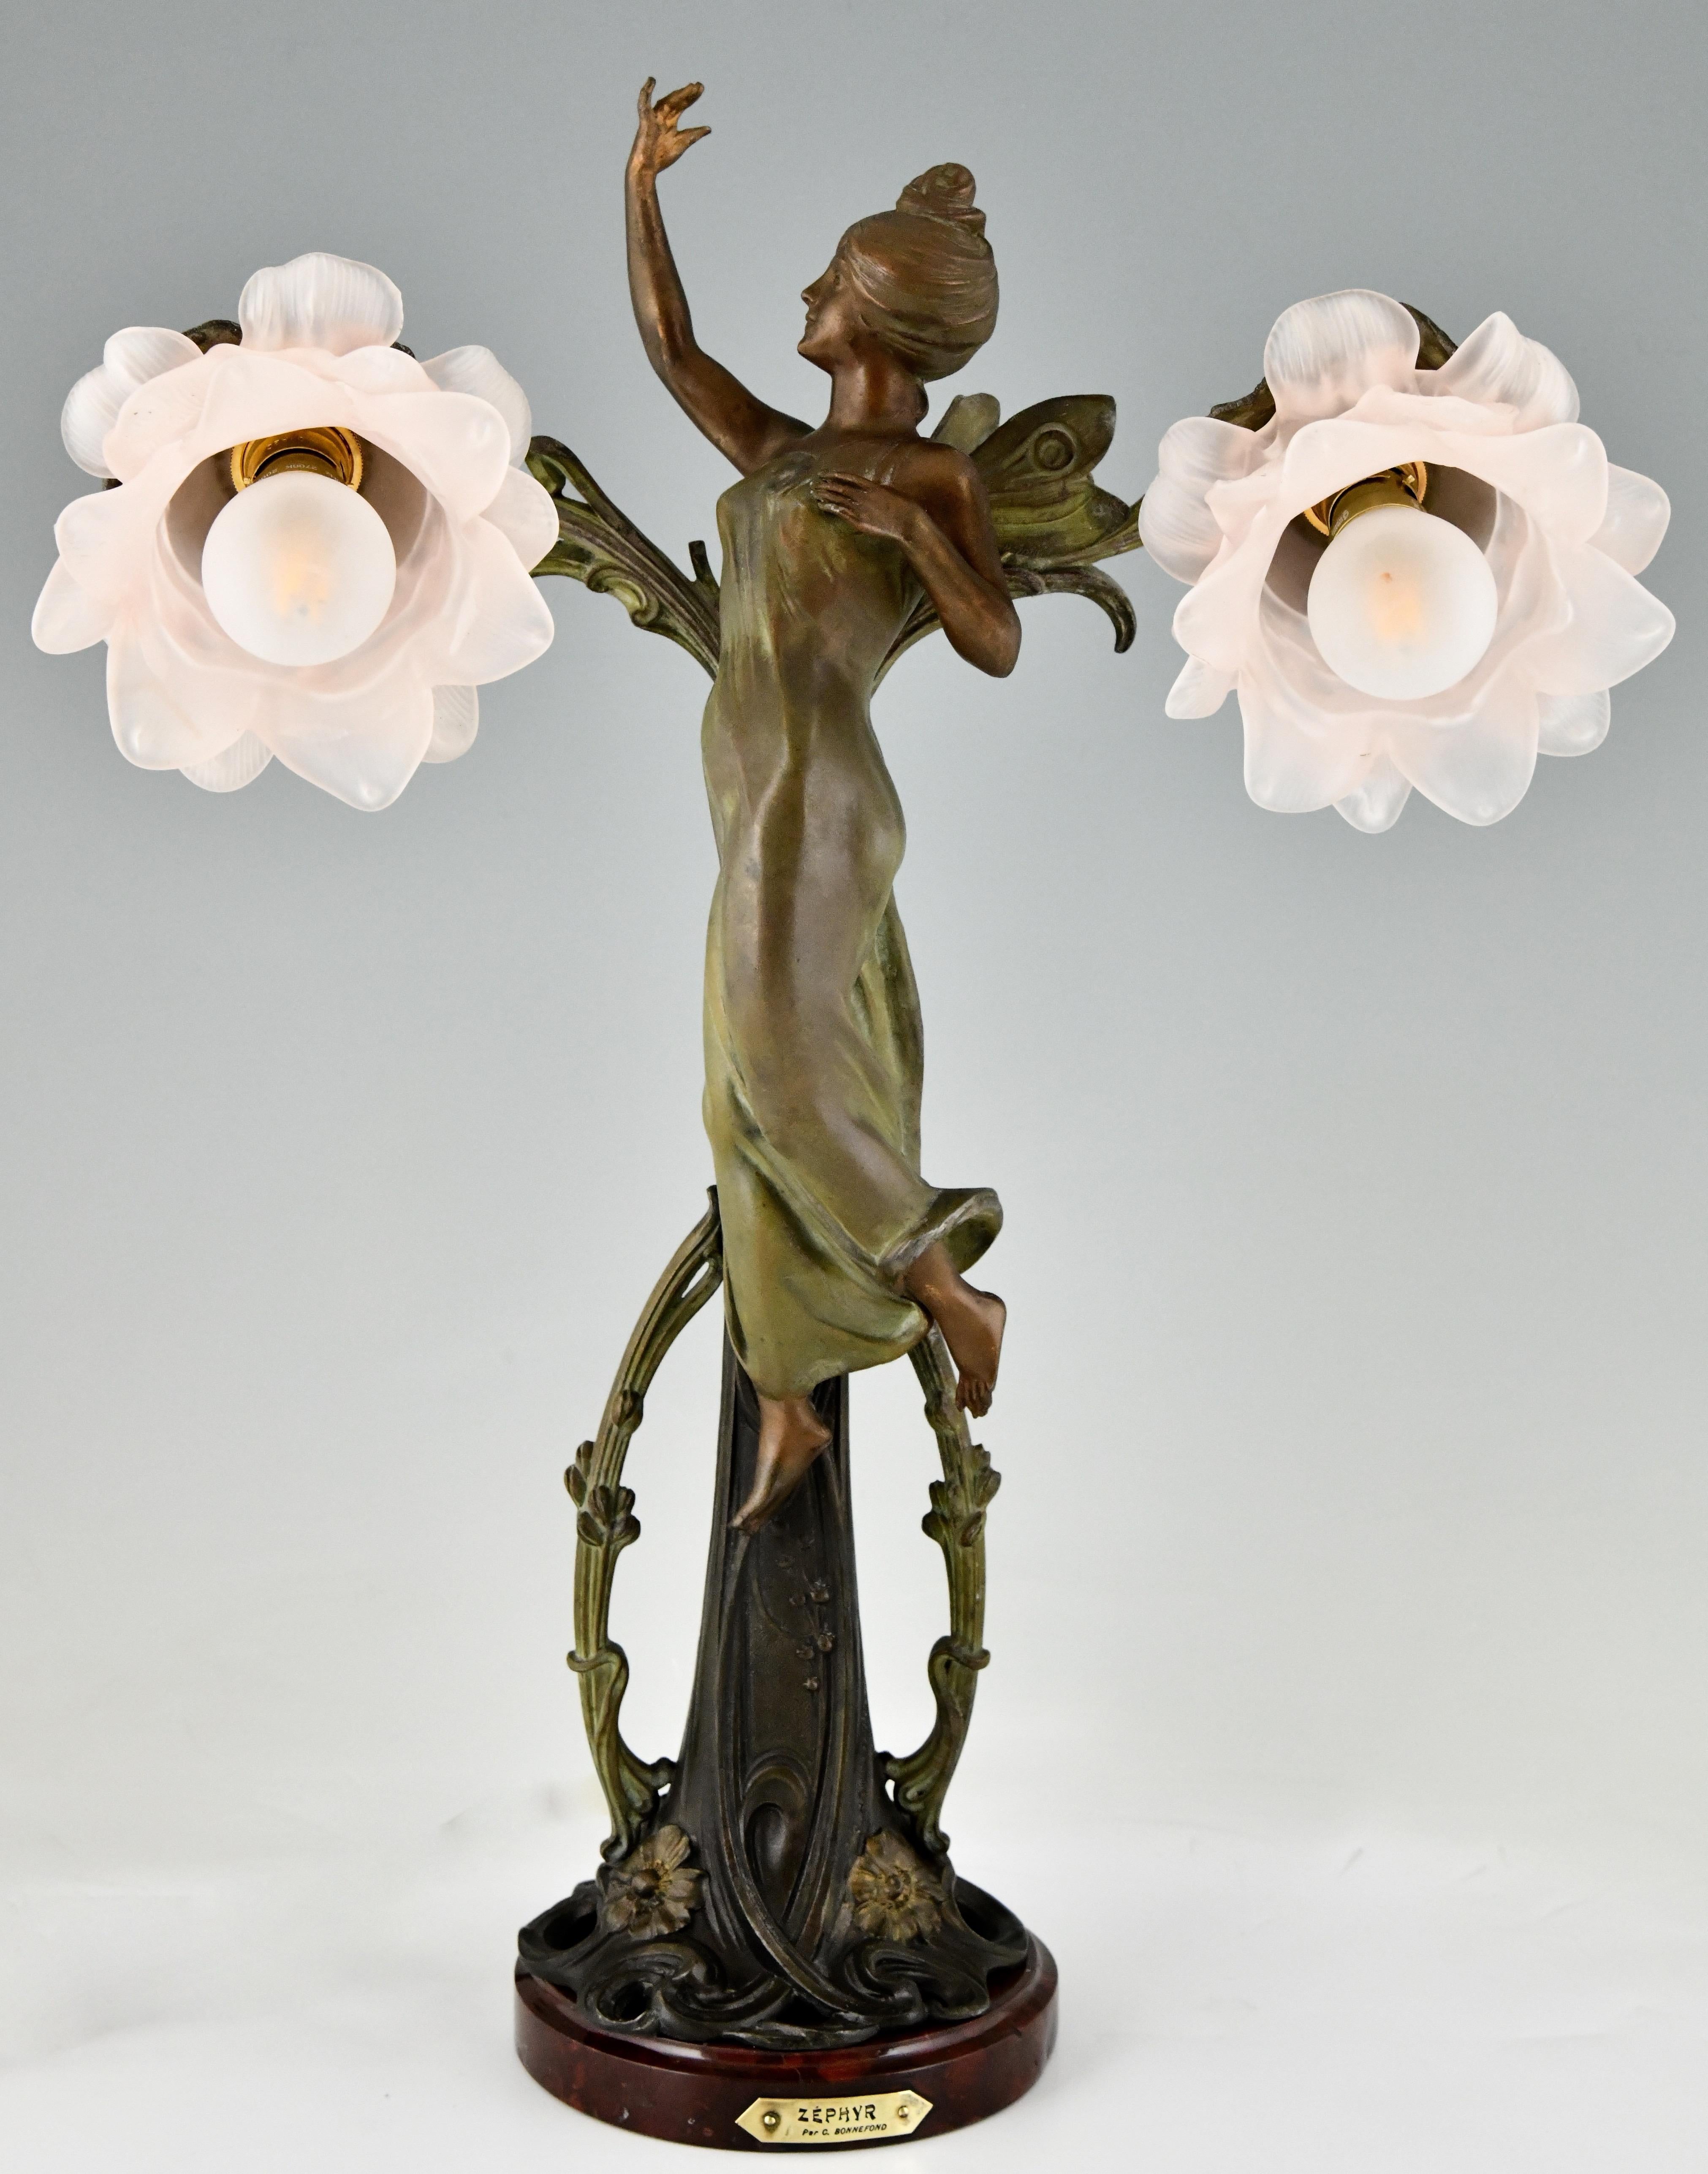 20th Century Pair of Art Nouveau Lamps Ladies and Flowers by Bonnefond, France, 1900